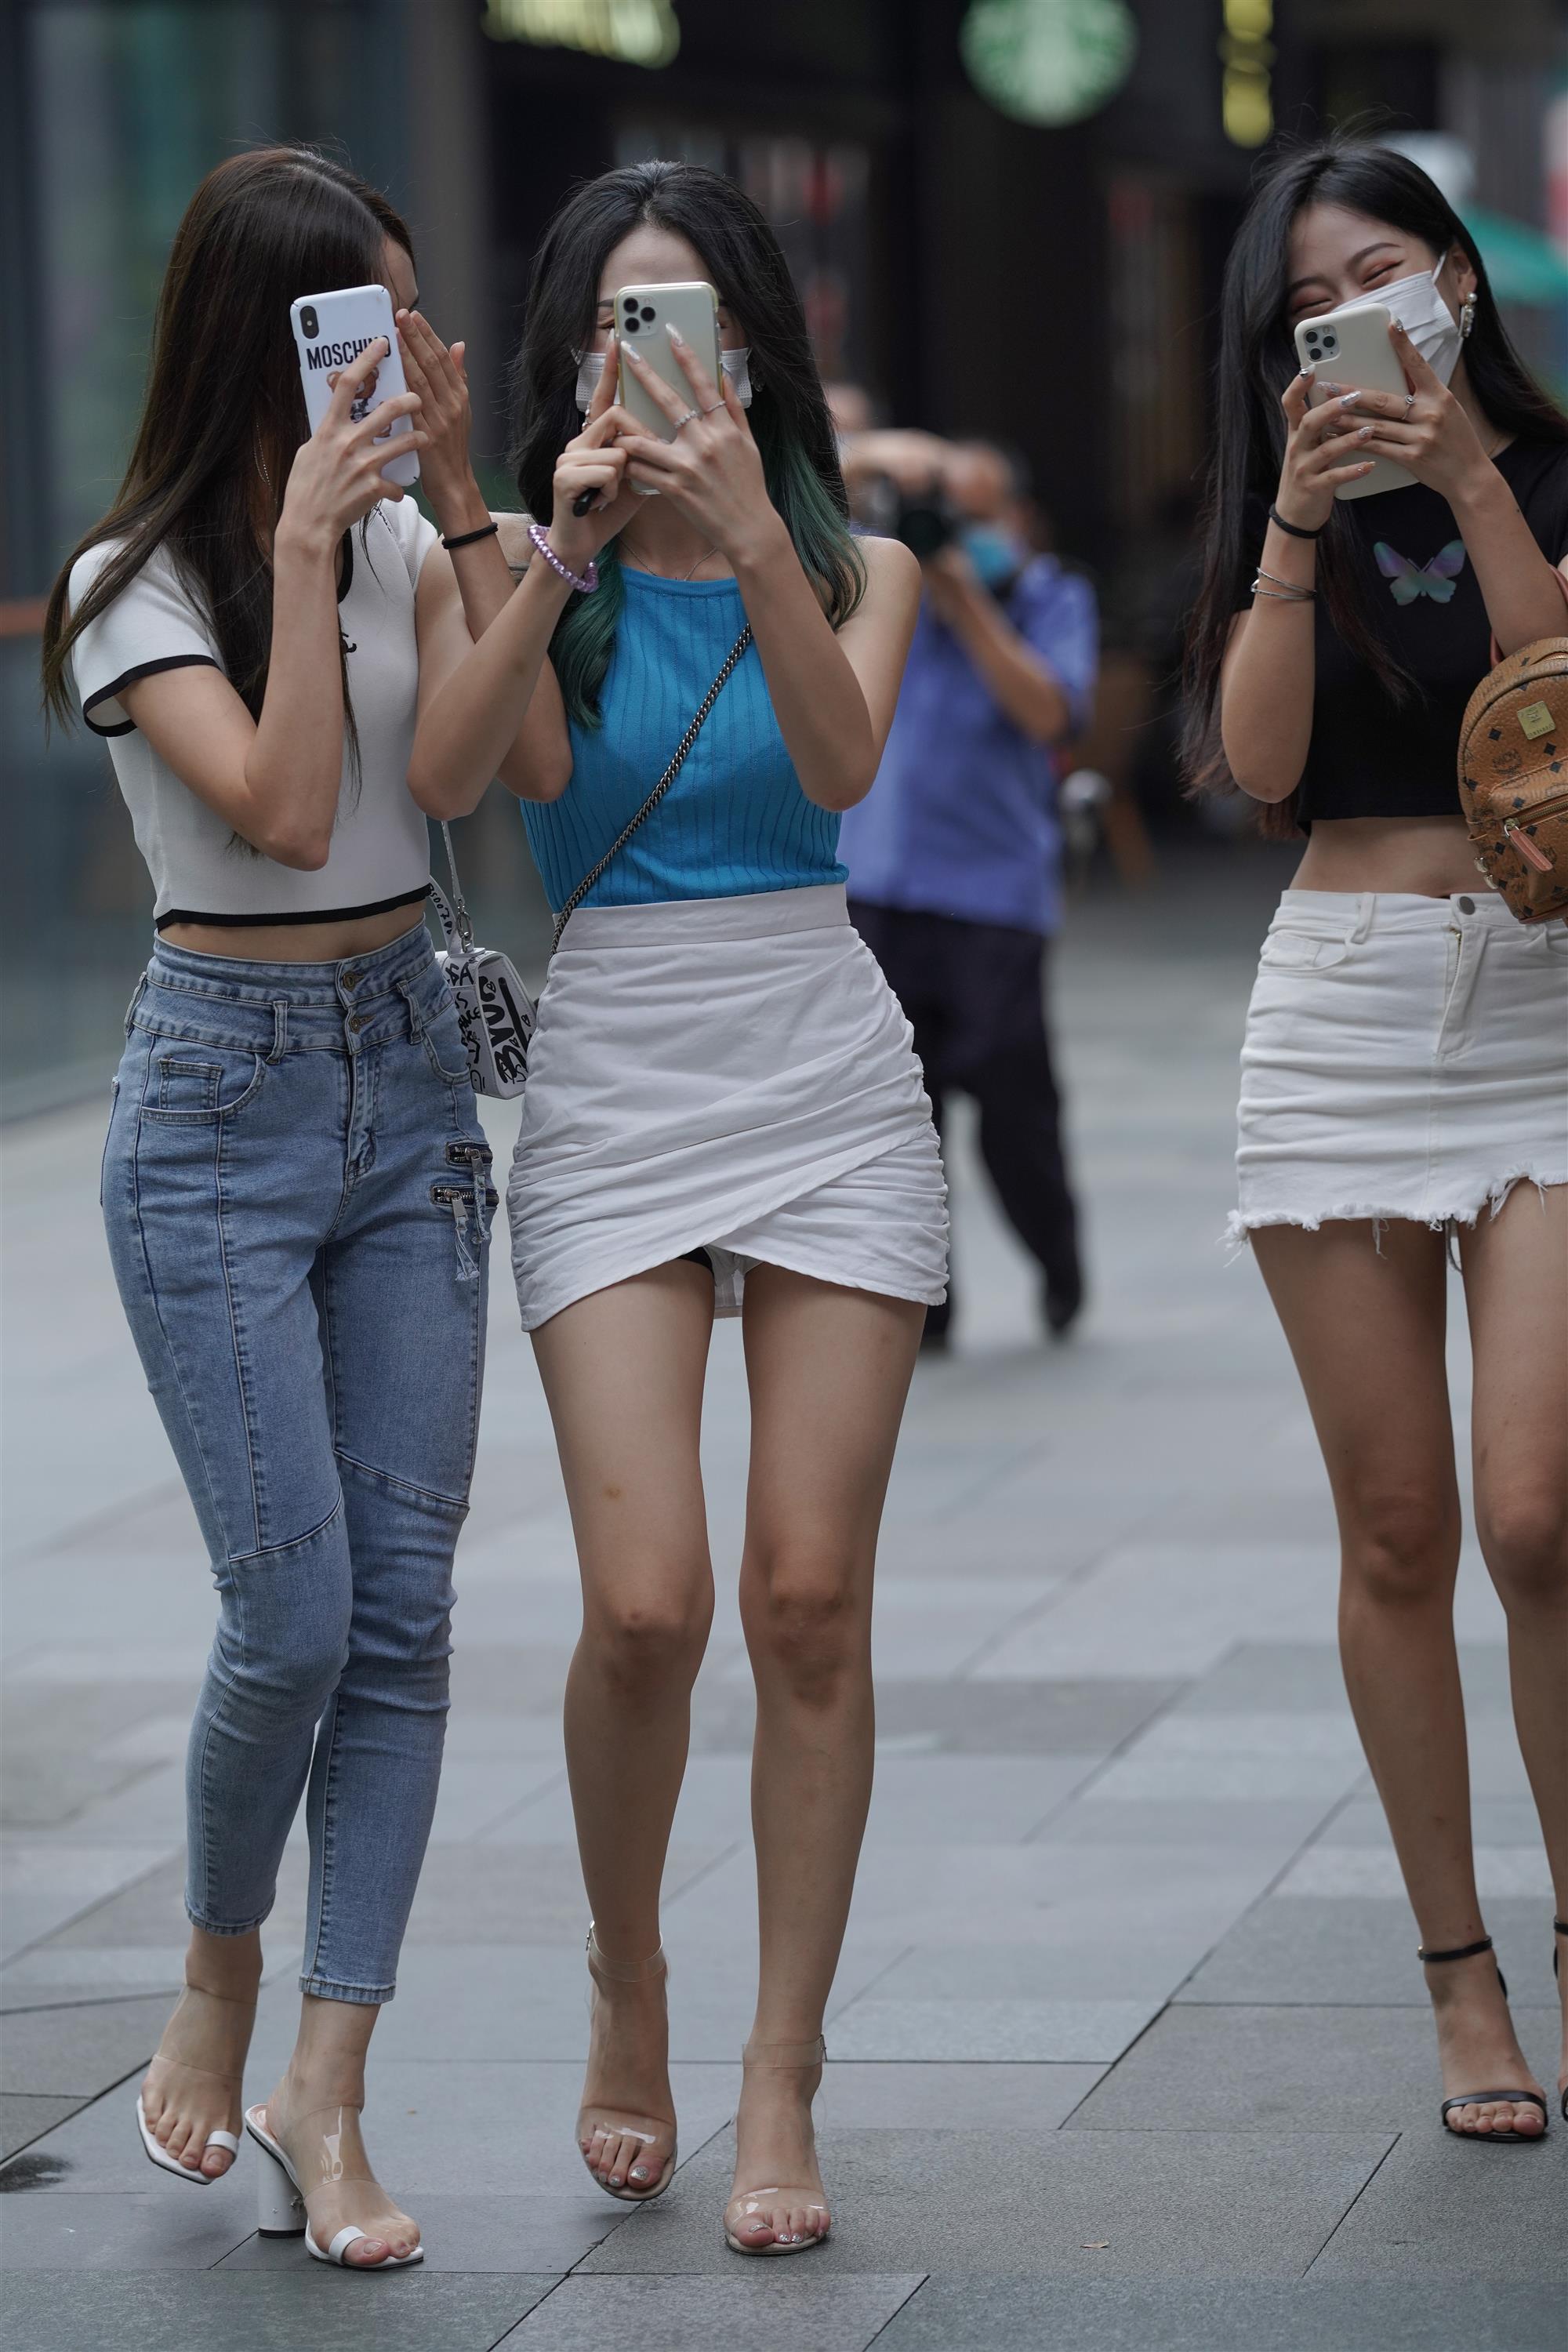 Street Three girls in short skirts - 132.jpg